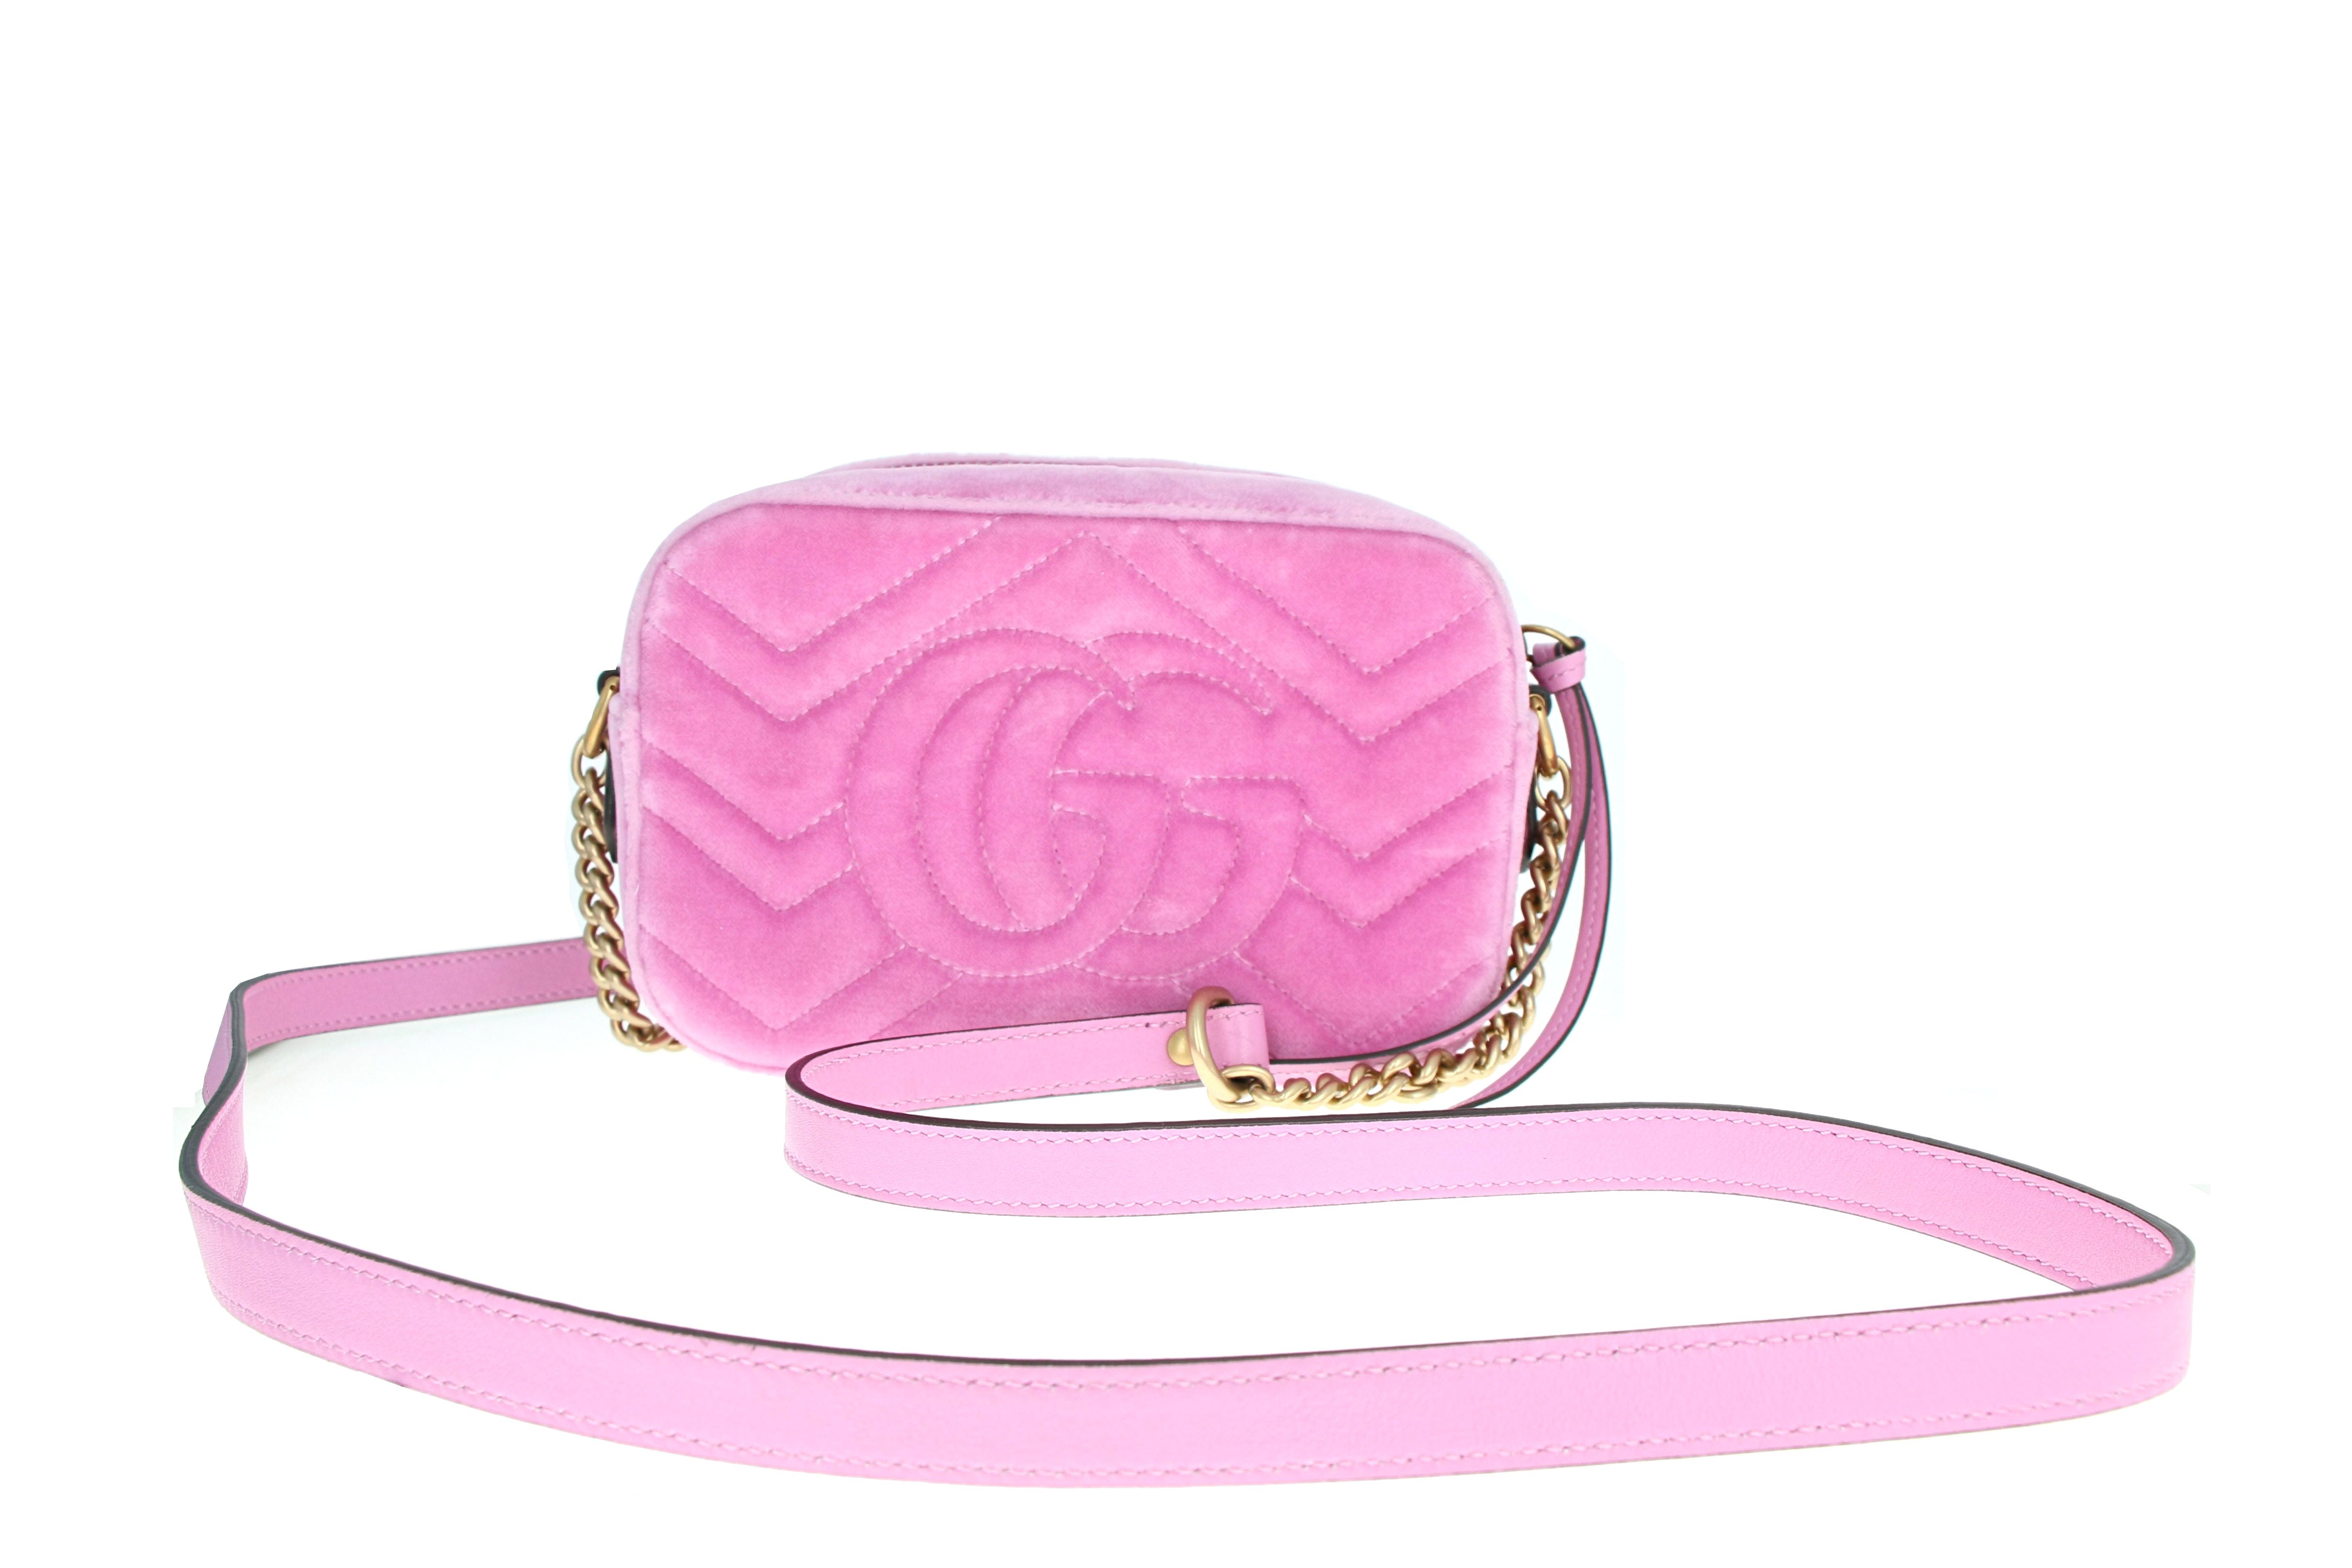 Pink Gucci like Handbag | Staten Artistry